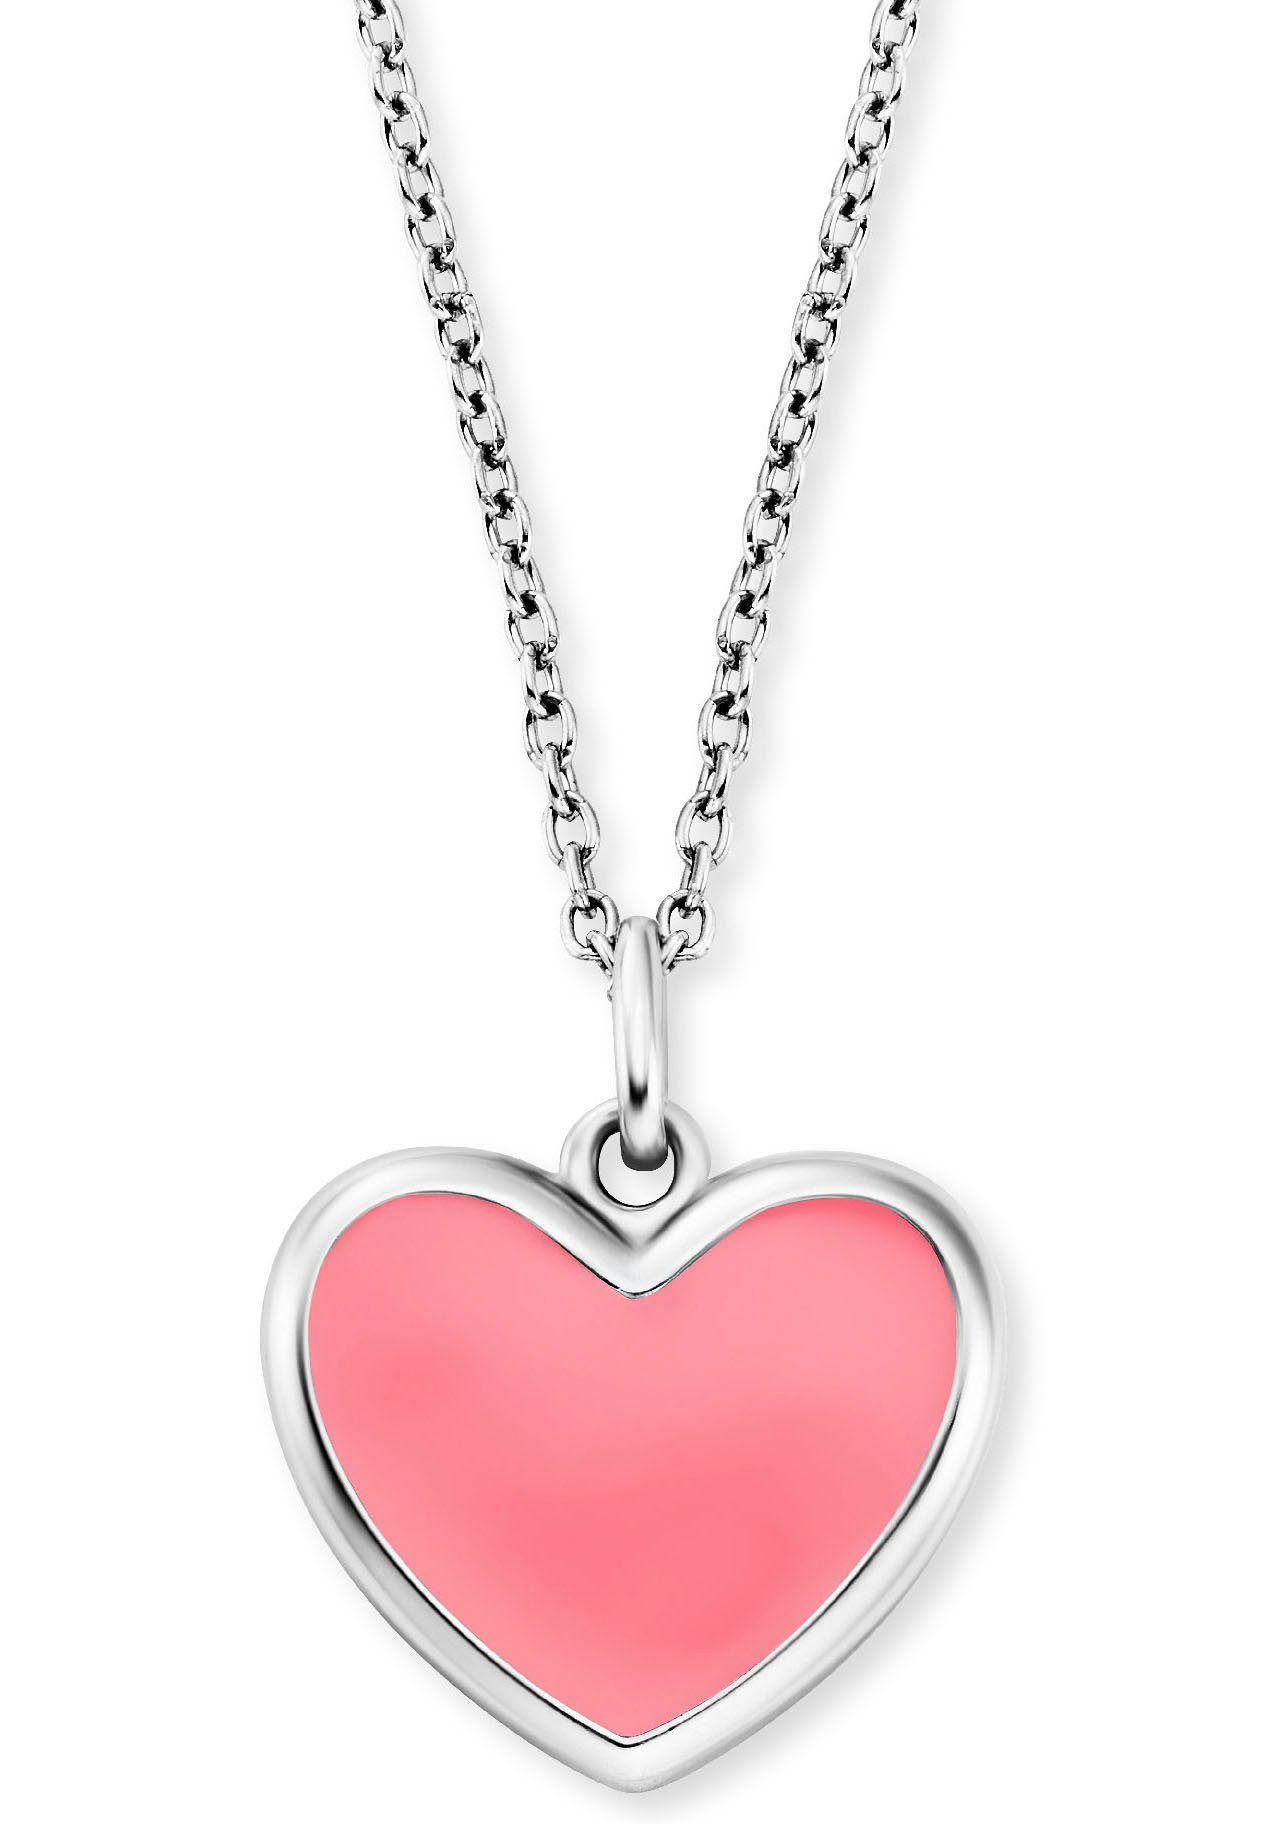 Herzengel Kette mit Anhänger Schmuck Geschenk, Little Heart, Herz, HEN-HEART-06,  HEN-HEART-13, Dieses Herz Symbol als süßer Blickfang symbolisiert Liebe und  Zuneigung